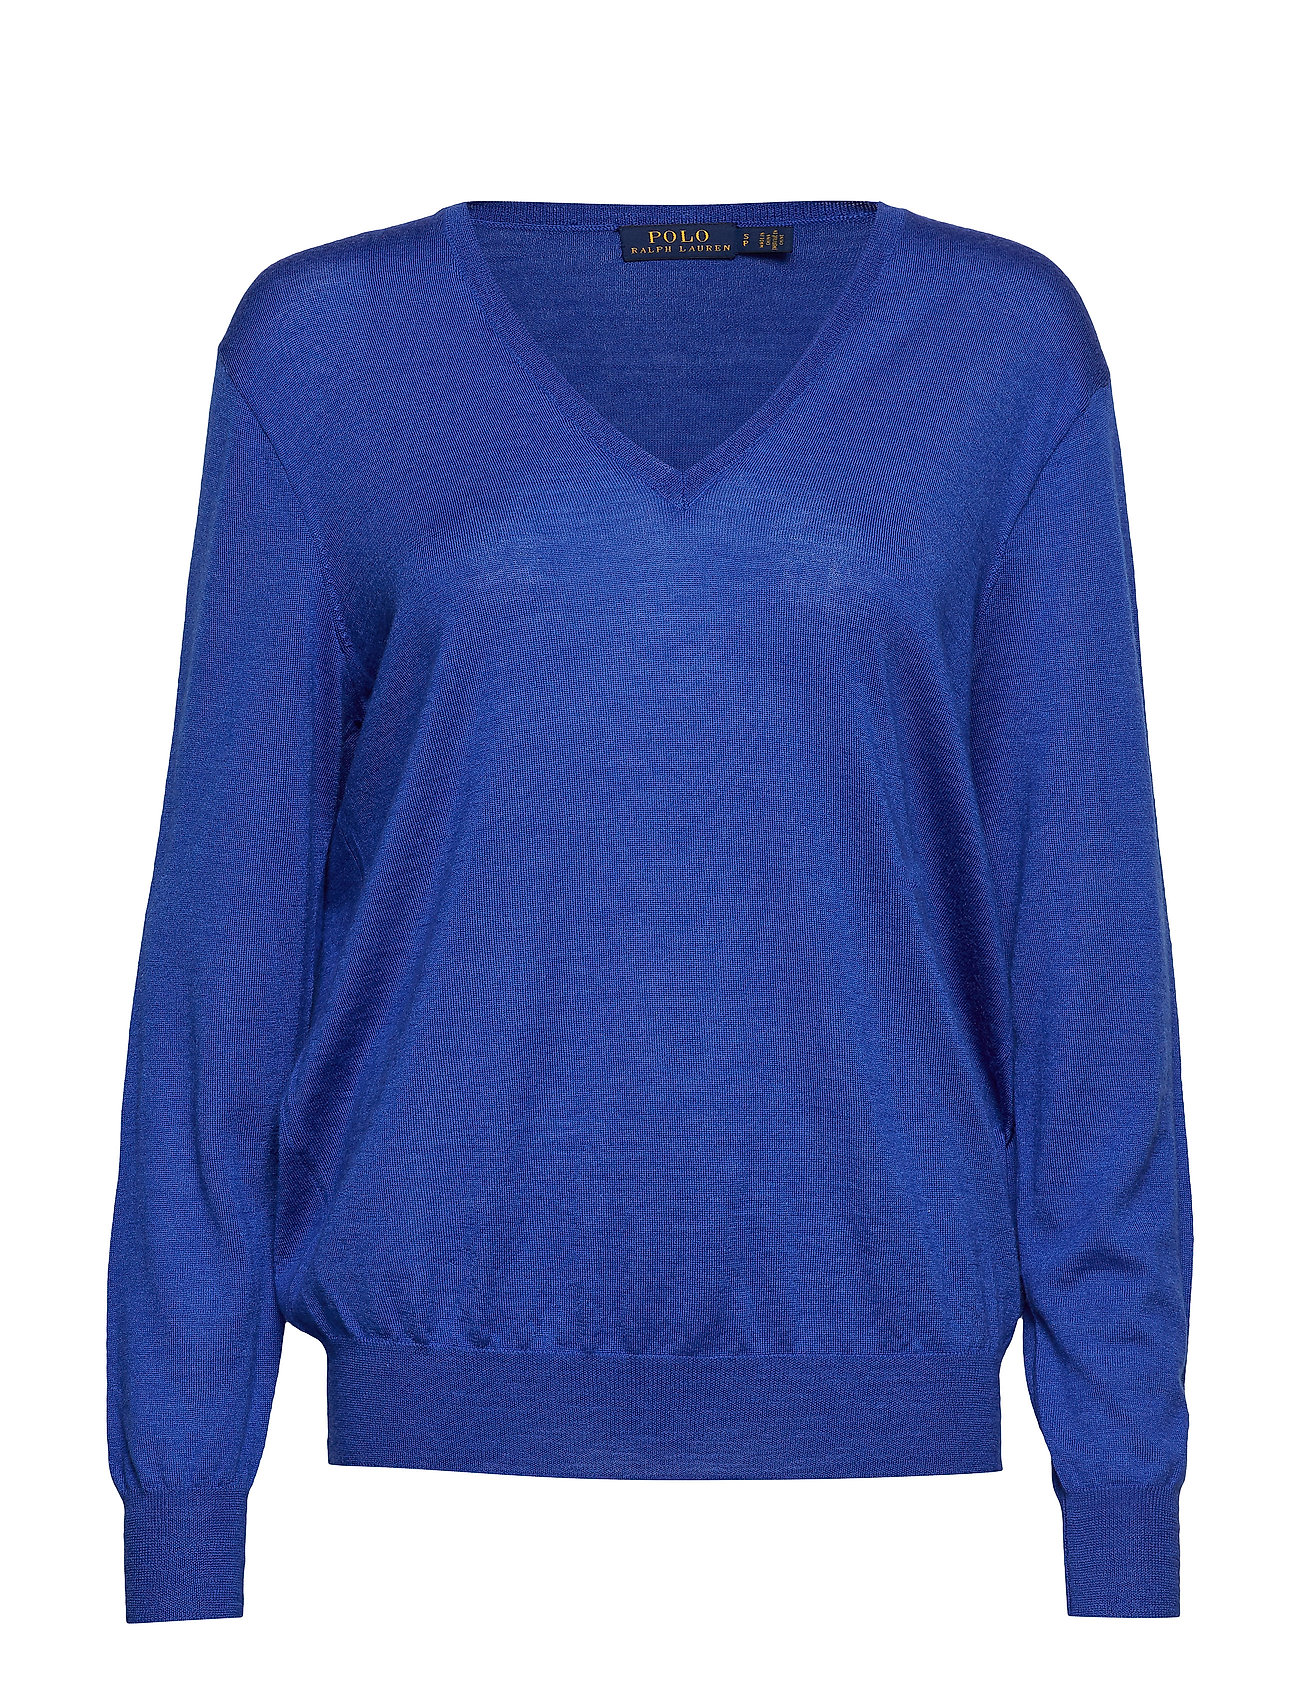 polo blue sweater